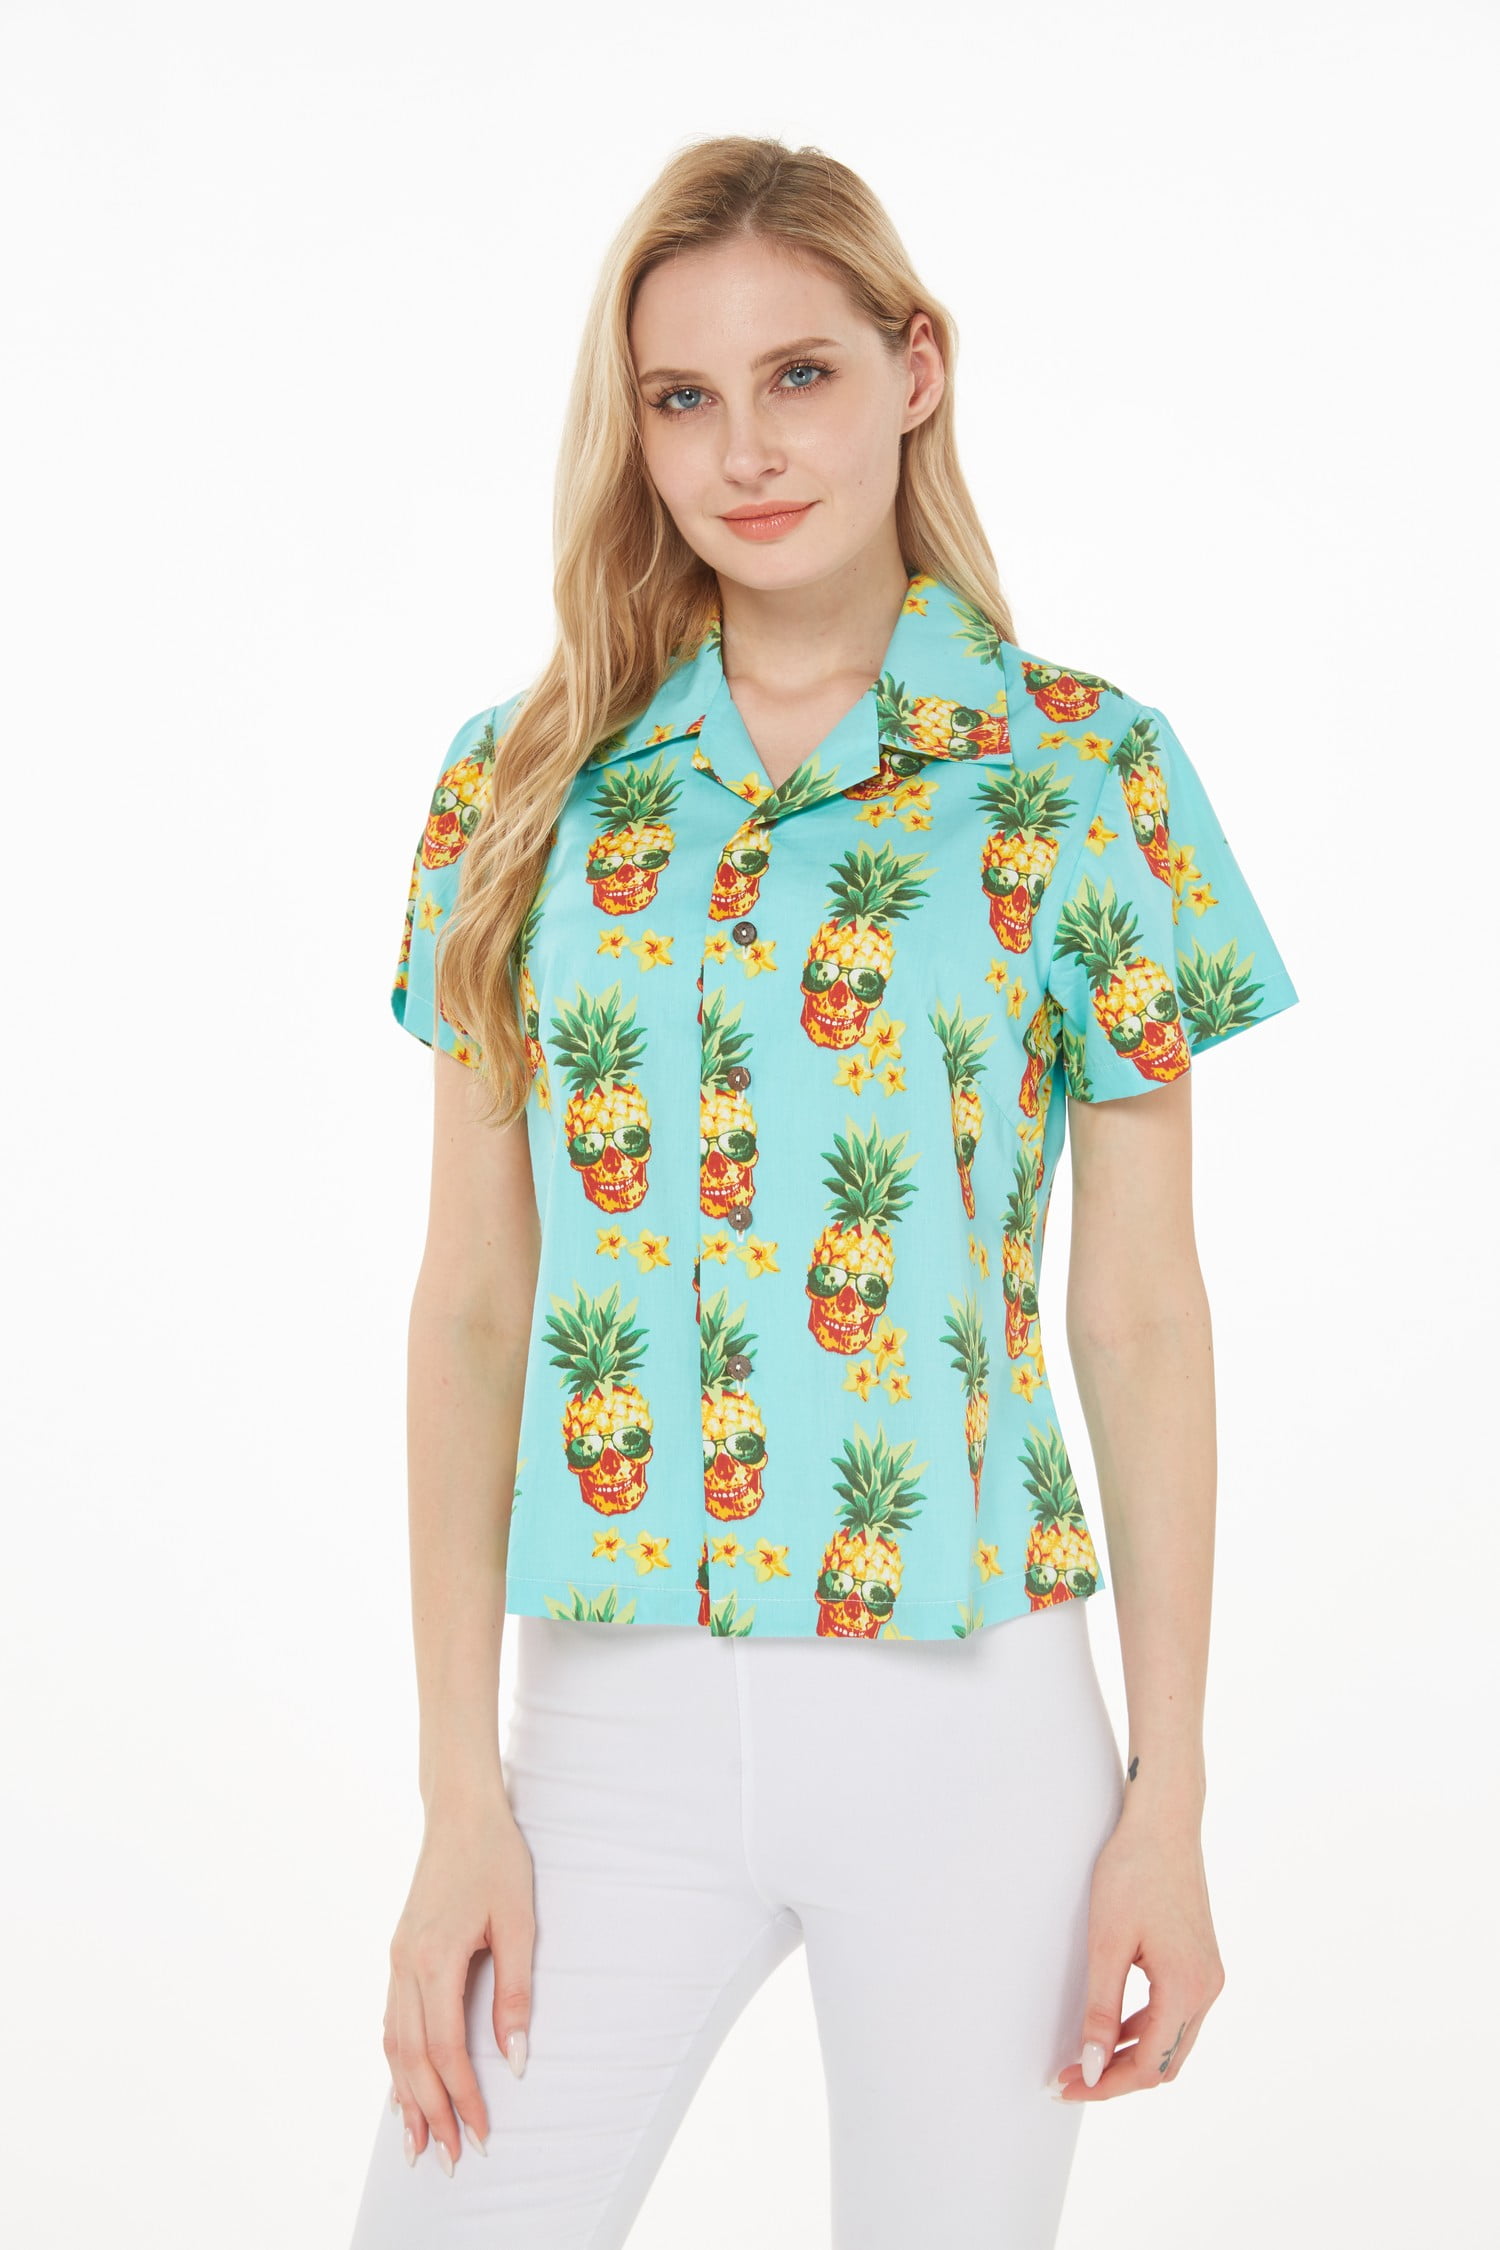 Women's Hawaiian Lady Aloha Shirt in Pineapple with Glasses in 